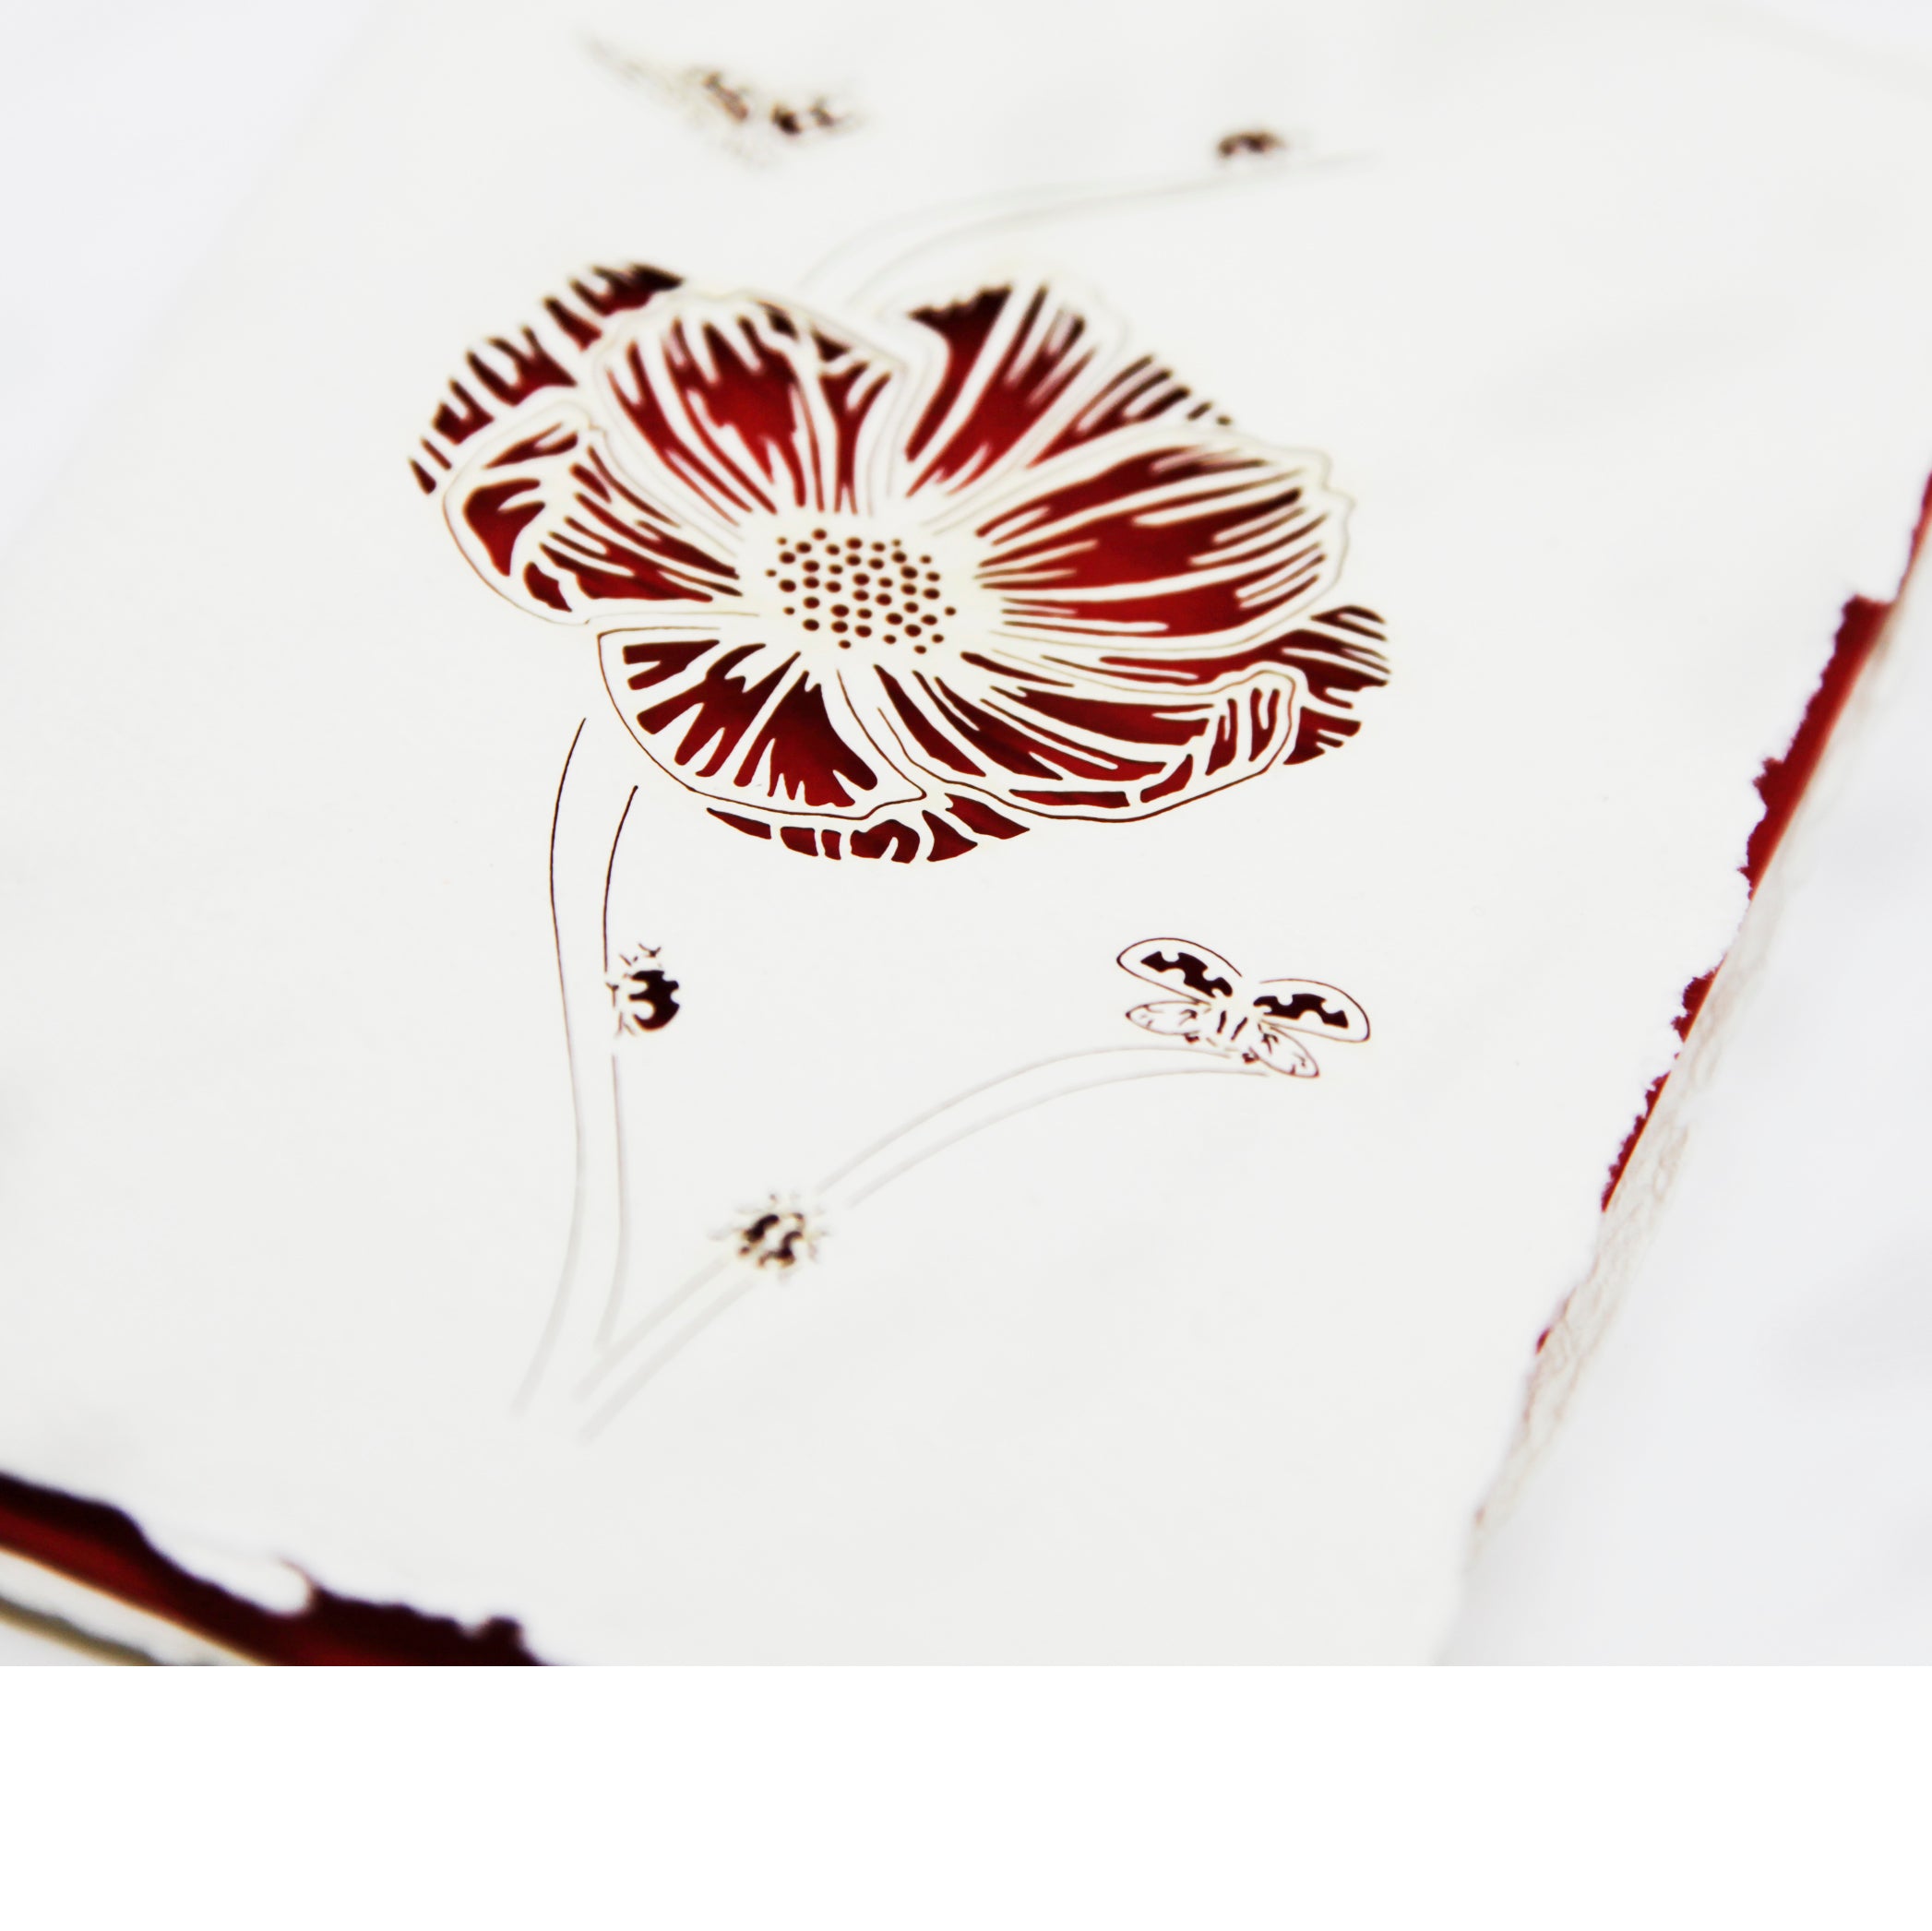 Handmade Paper Greeting Card with Ladybug, 15cm x 10cm